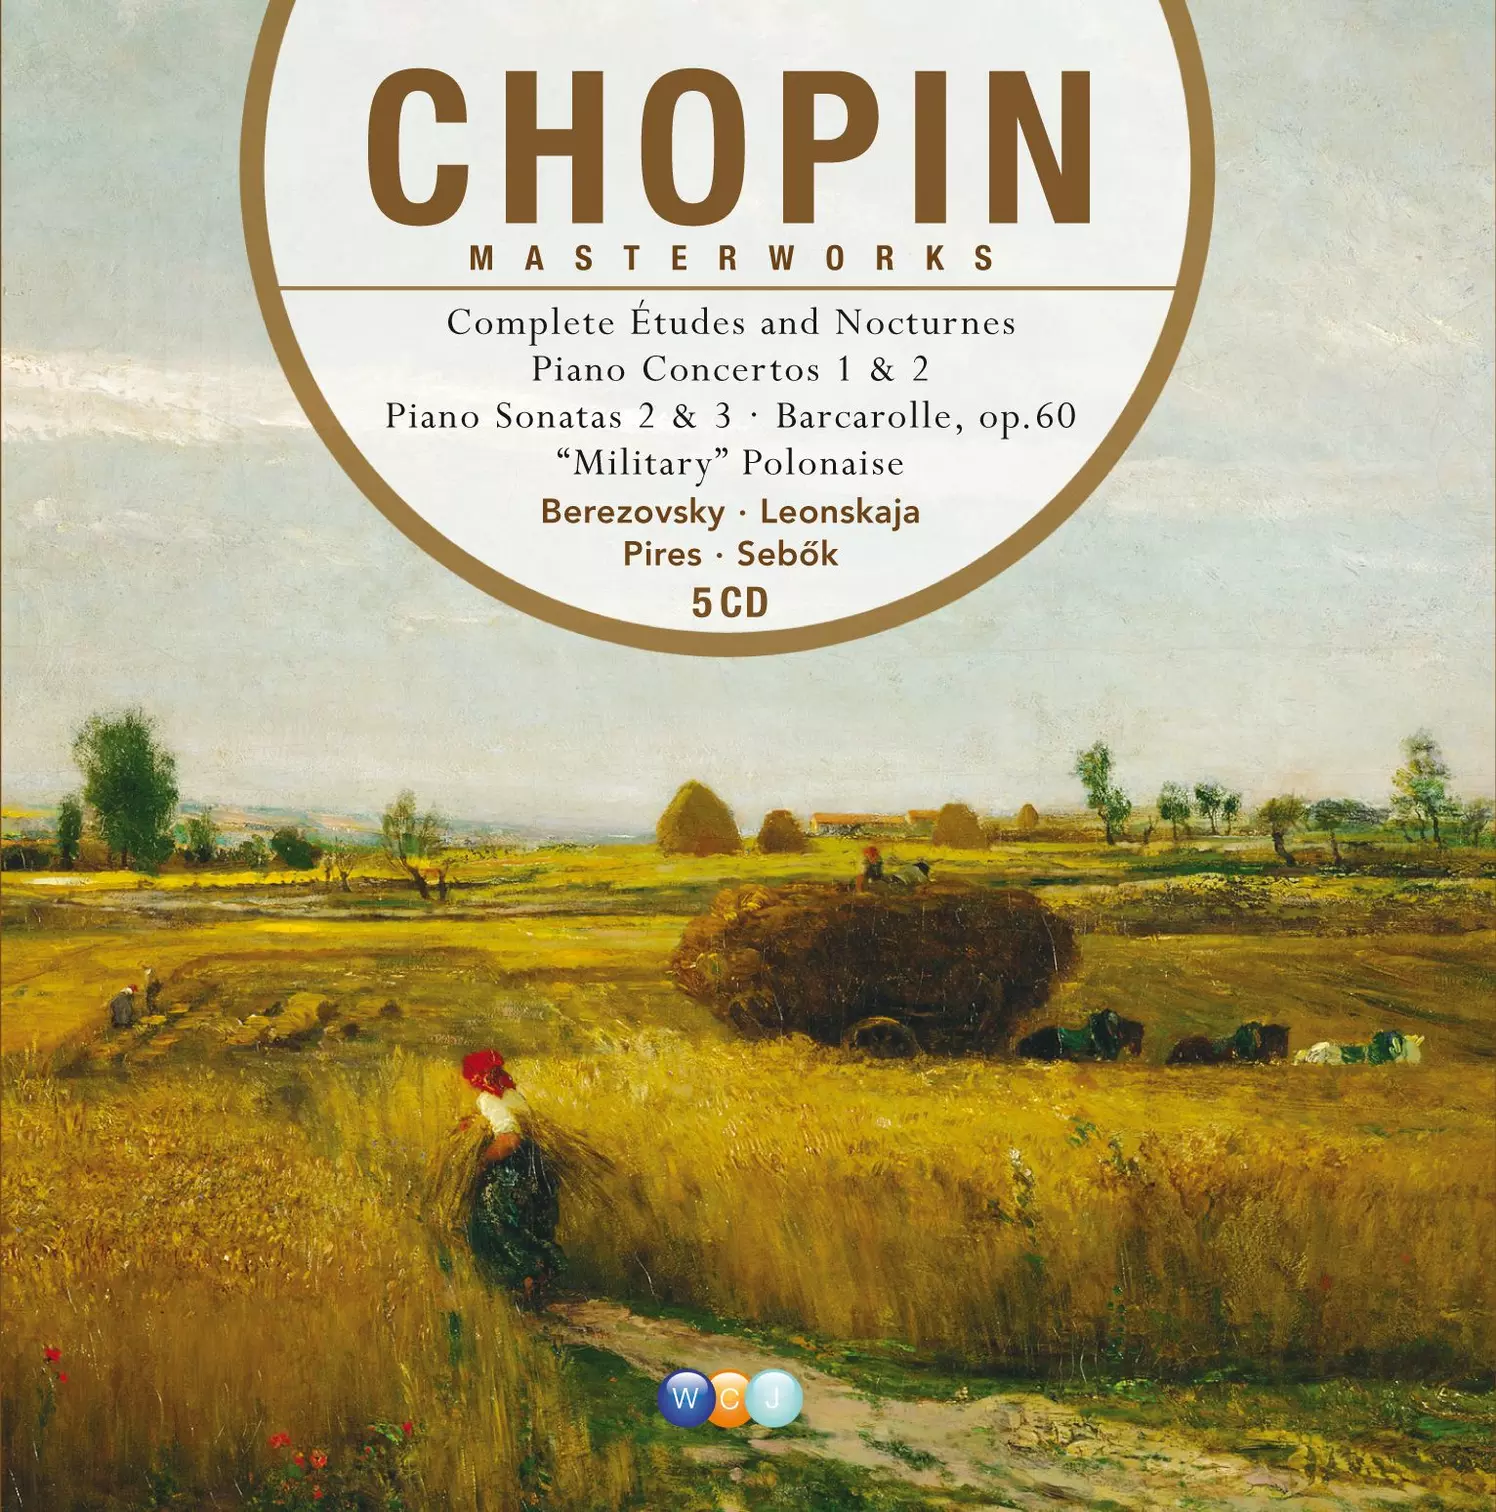 Chopin Masterworks I